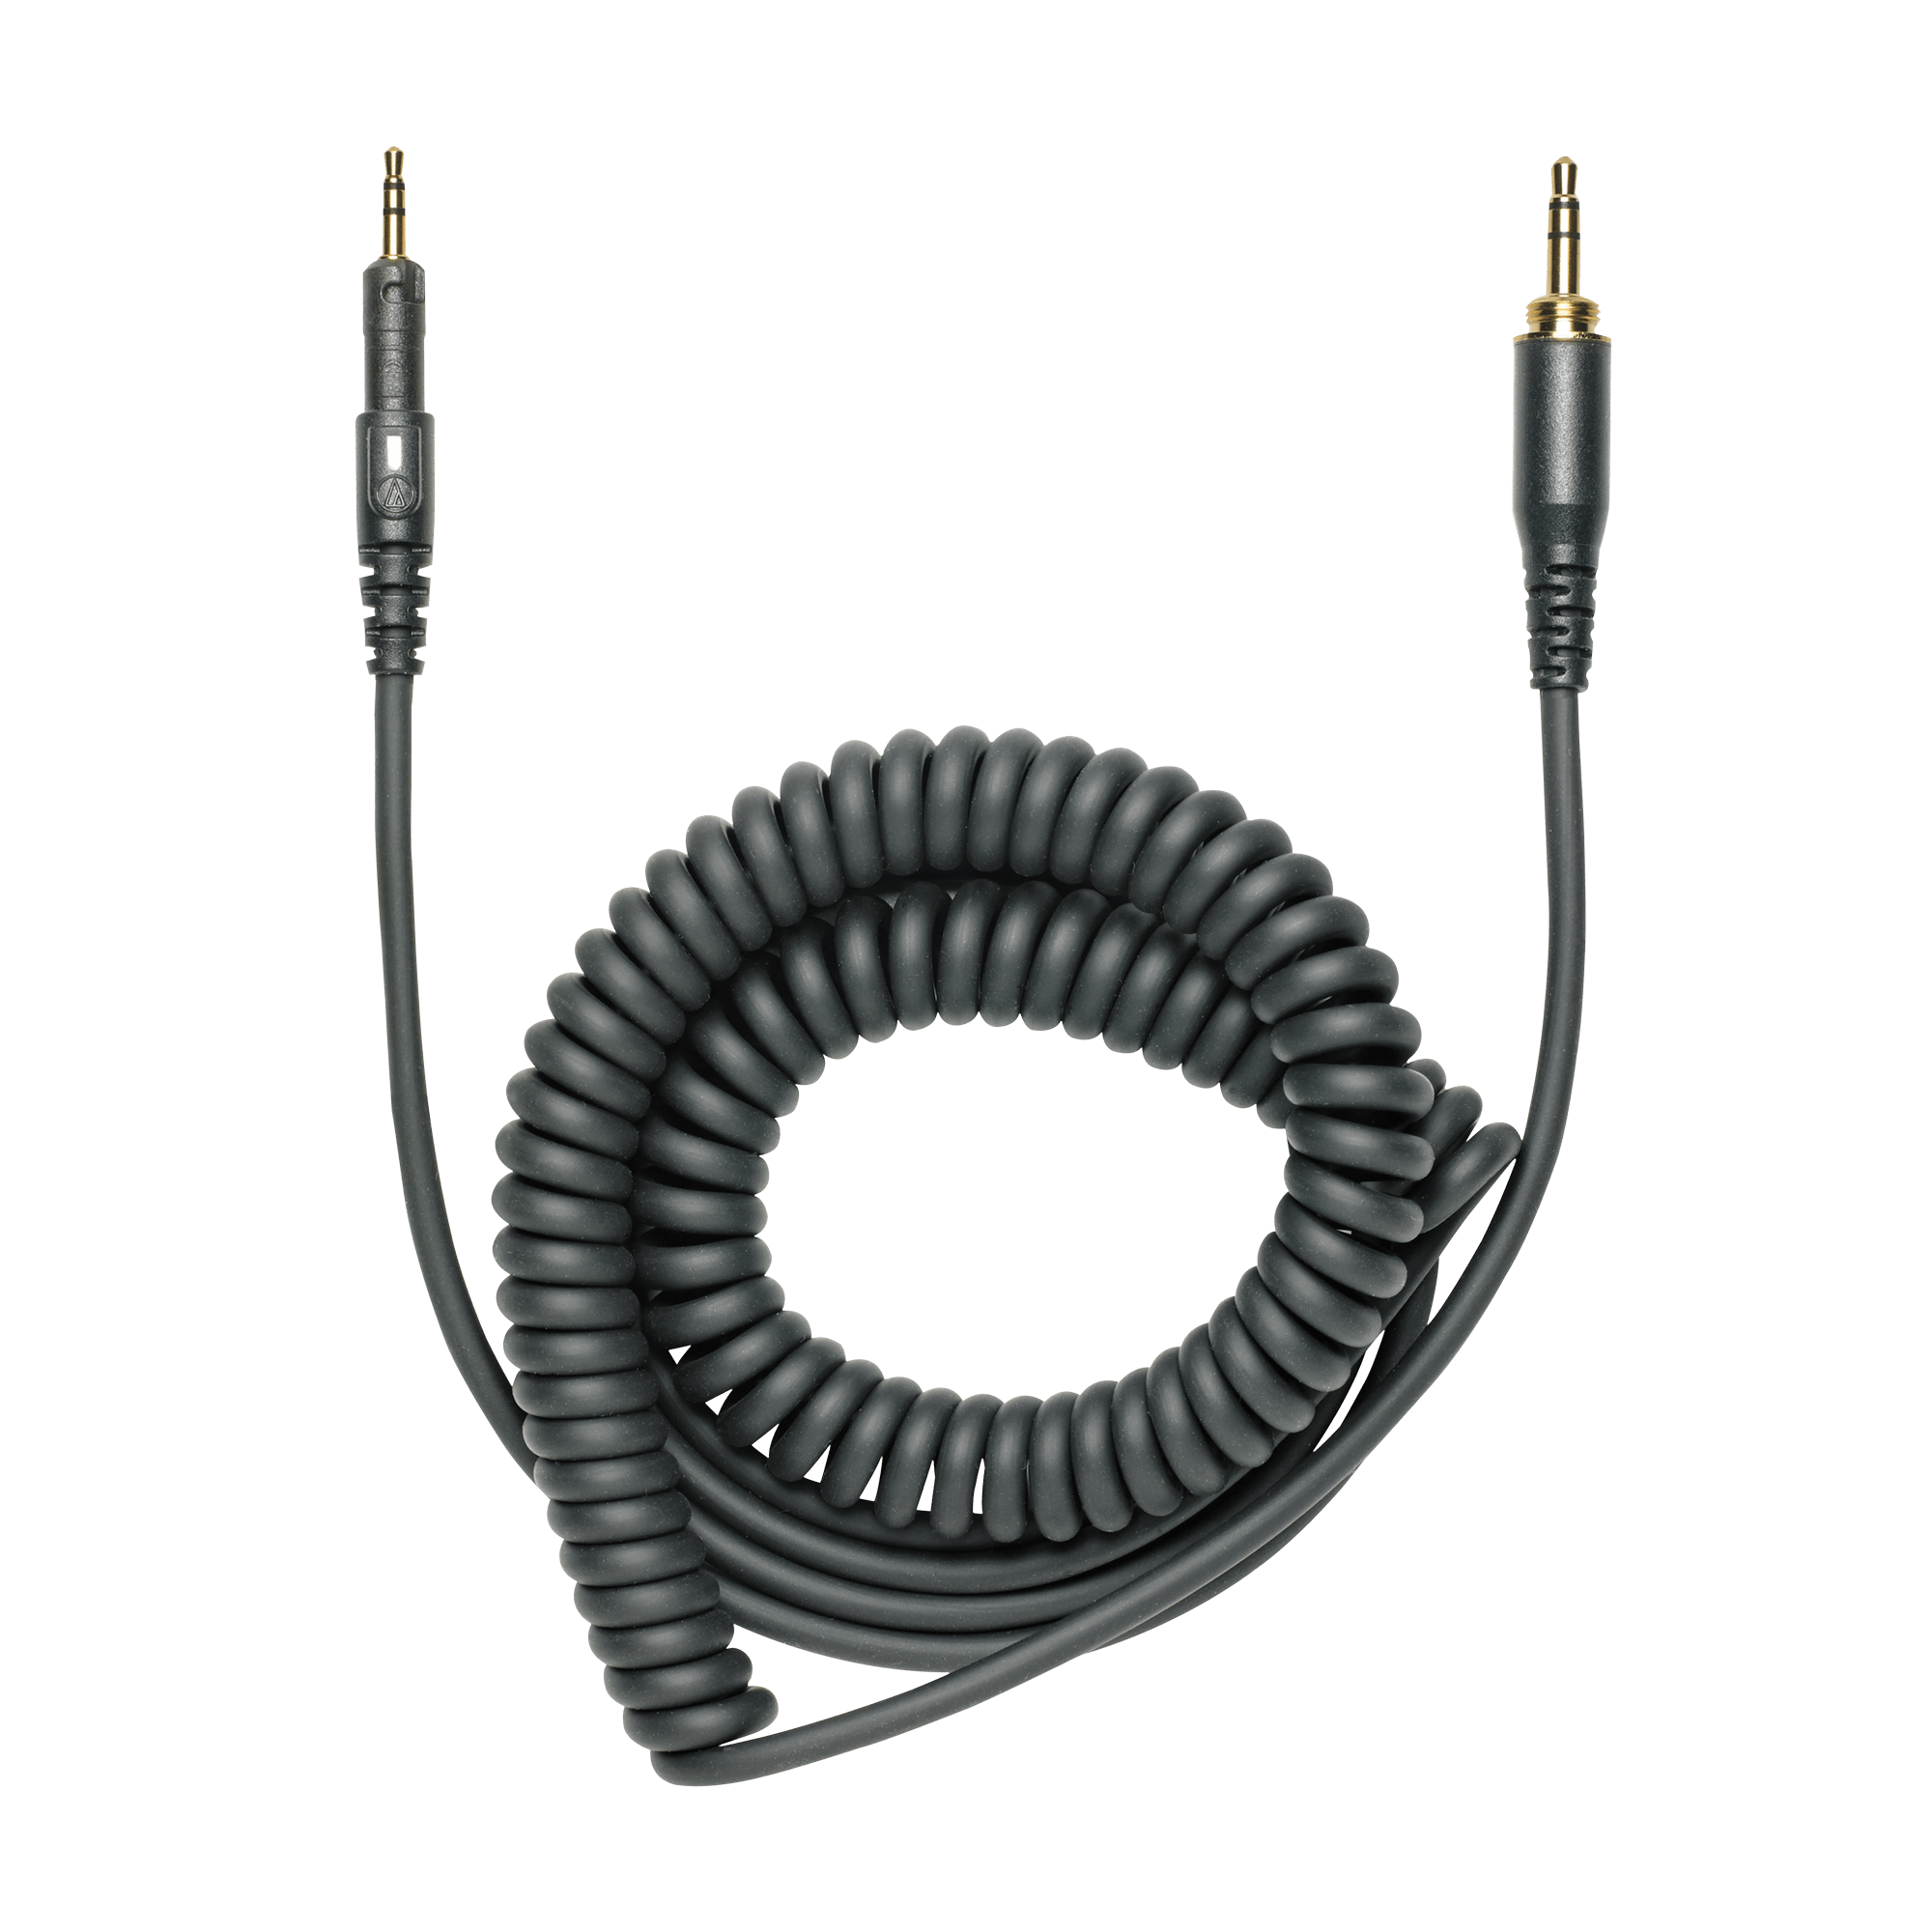 Audio-Technica ATH-M40x Closed-Back Professional Studio Monitor Headphones Black